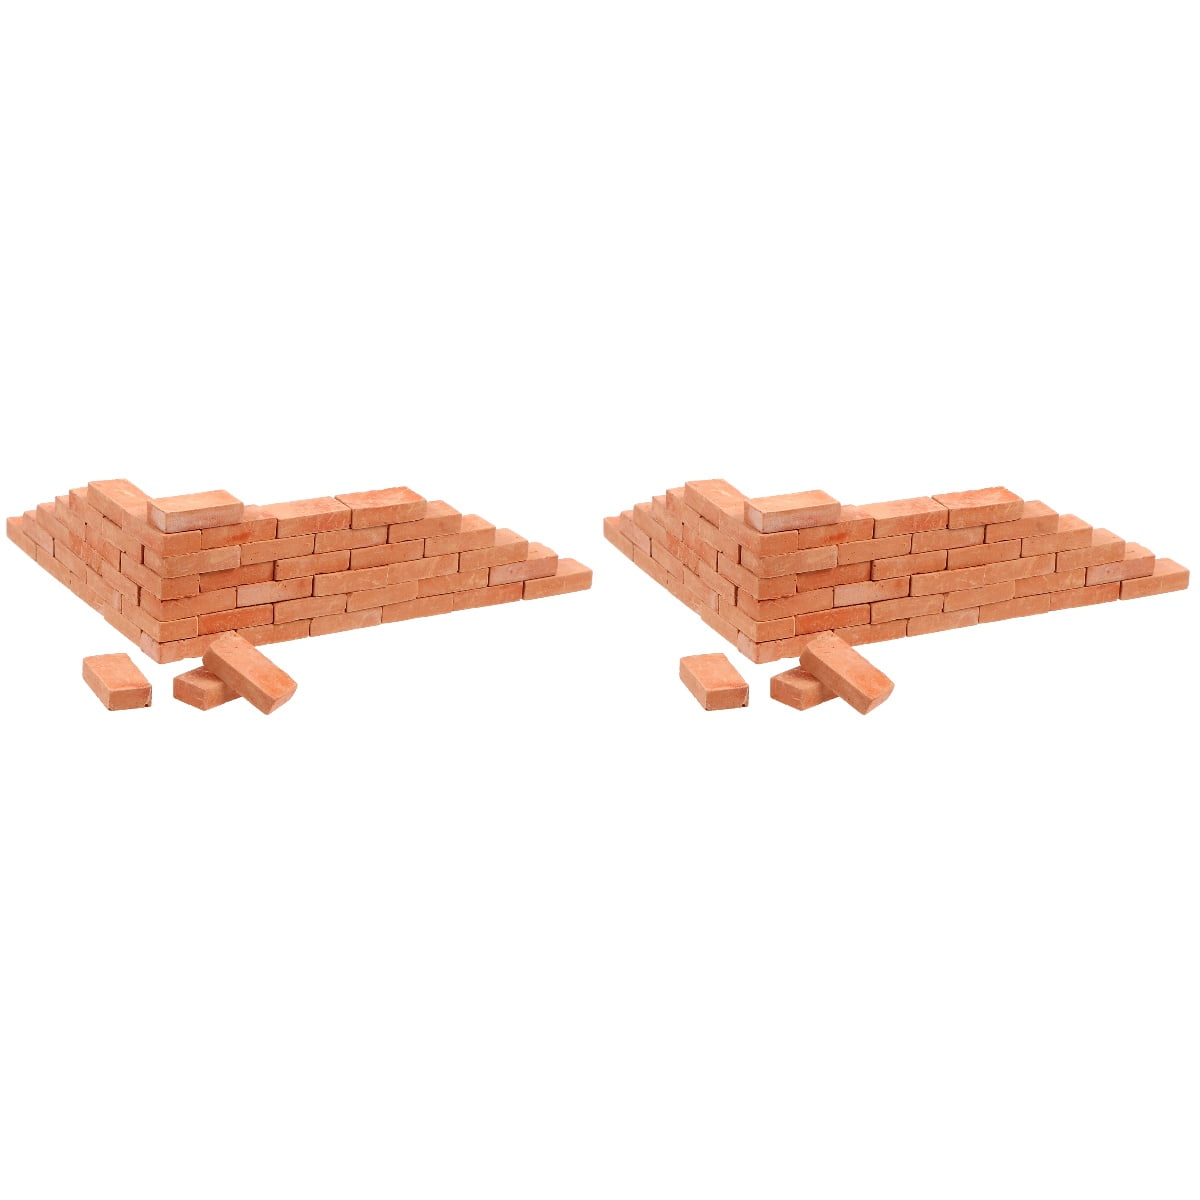 100Pcs Mini Red Miniature Bricks Model Brick Wall Small Bricks,for Crafts  Realistic Fake Bricks Mini Blocks for Dollhouse Mini Garden  Accessories(1/16 Scale) - Dollhouse Maker